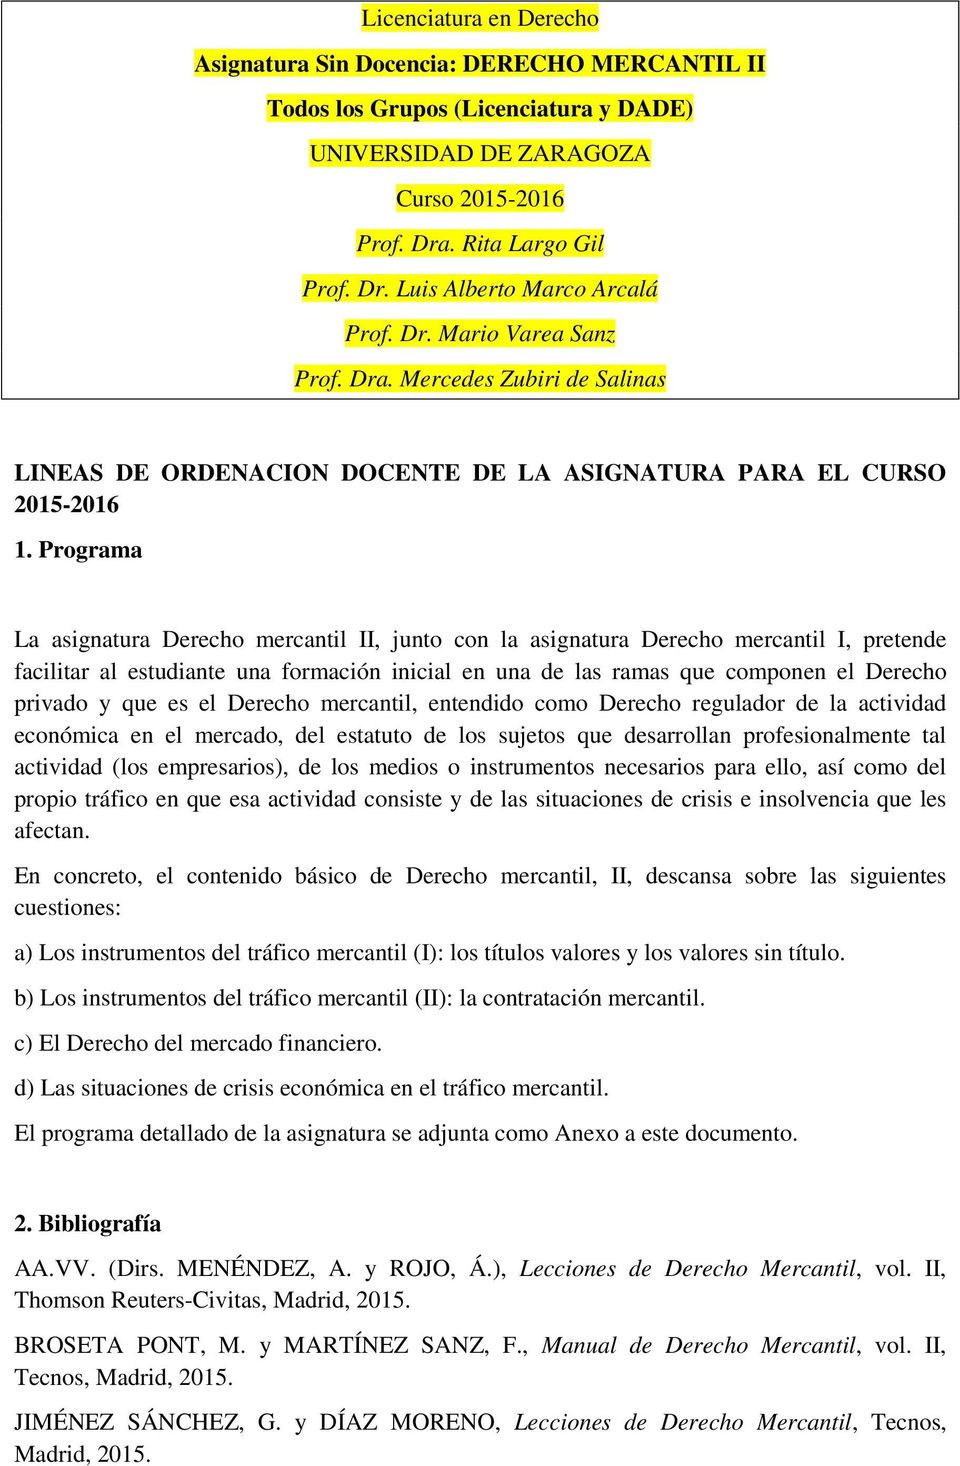 manual de derecho mercantil broseta volumen ii pdf free